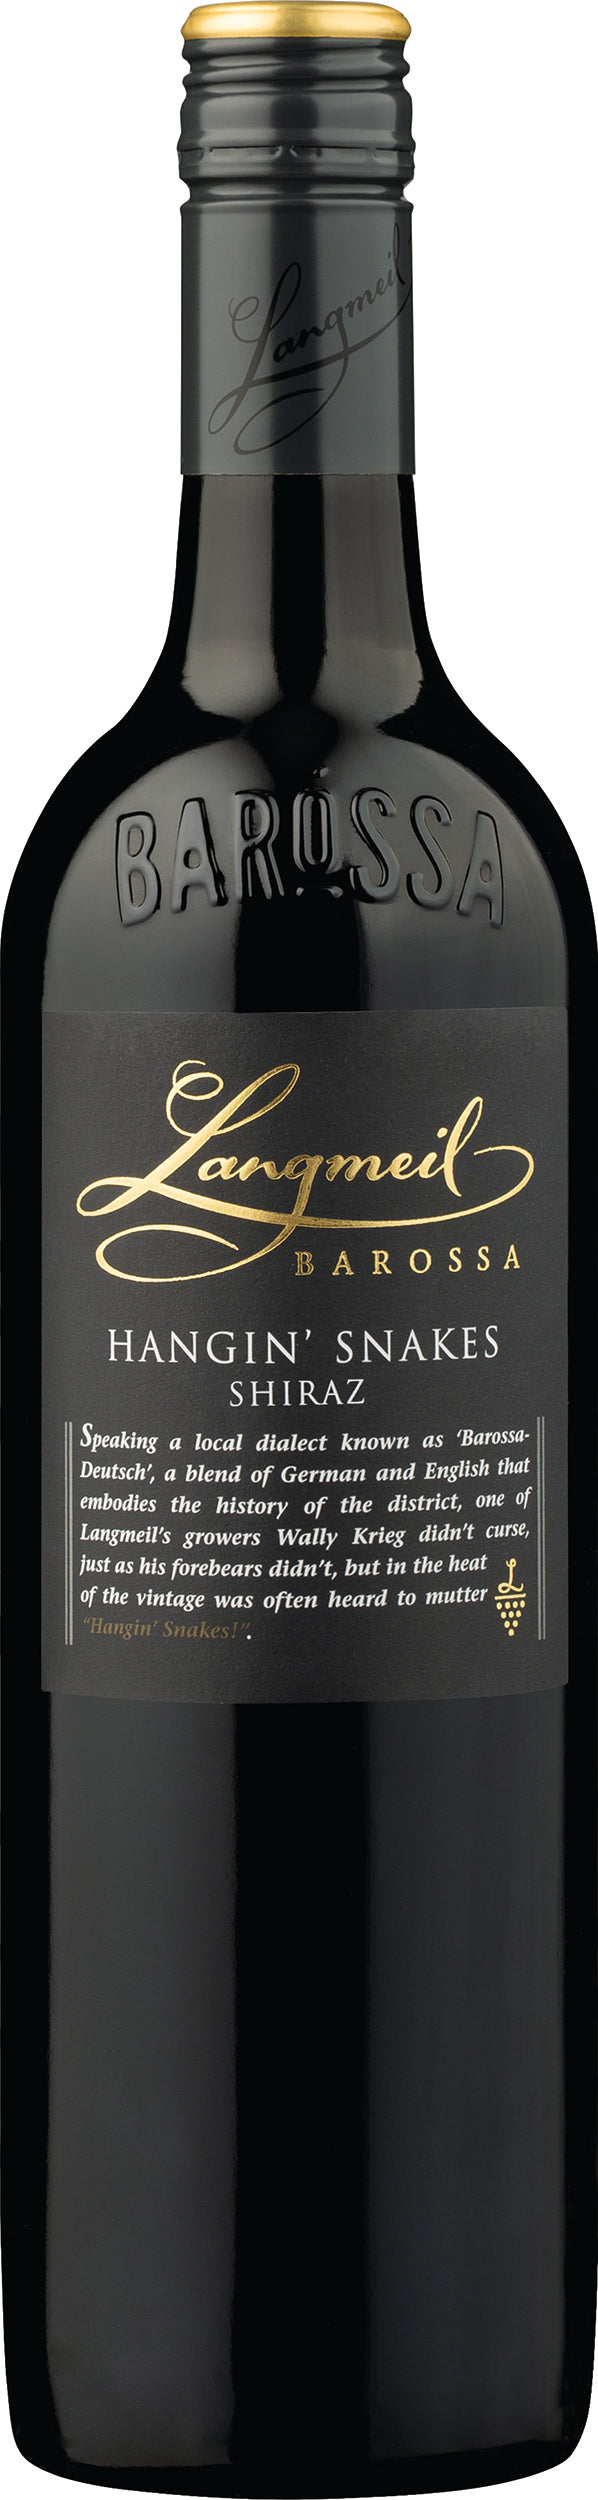 Langmeil Hangin Snakes Shiraz